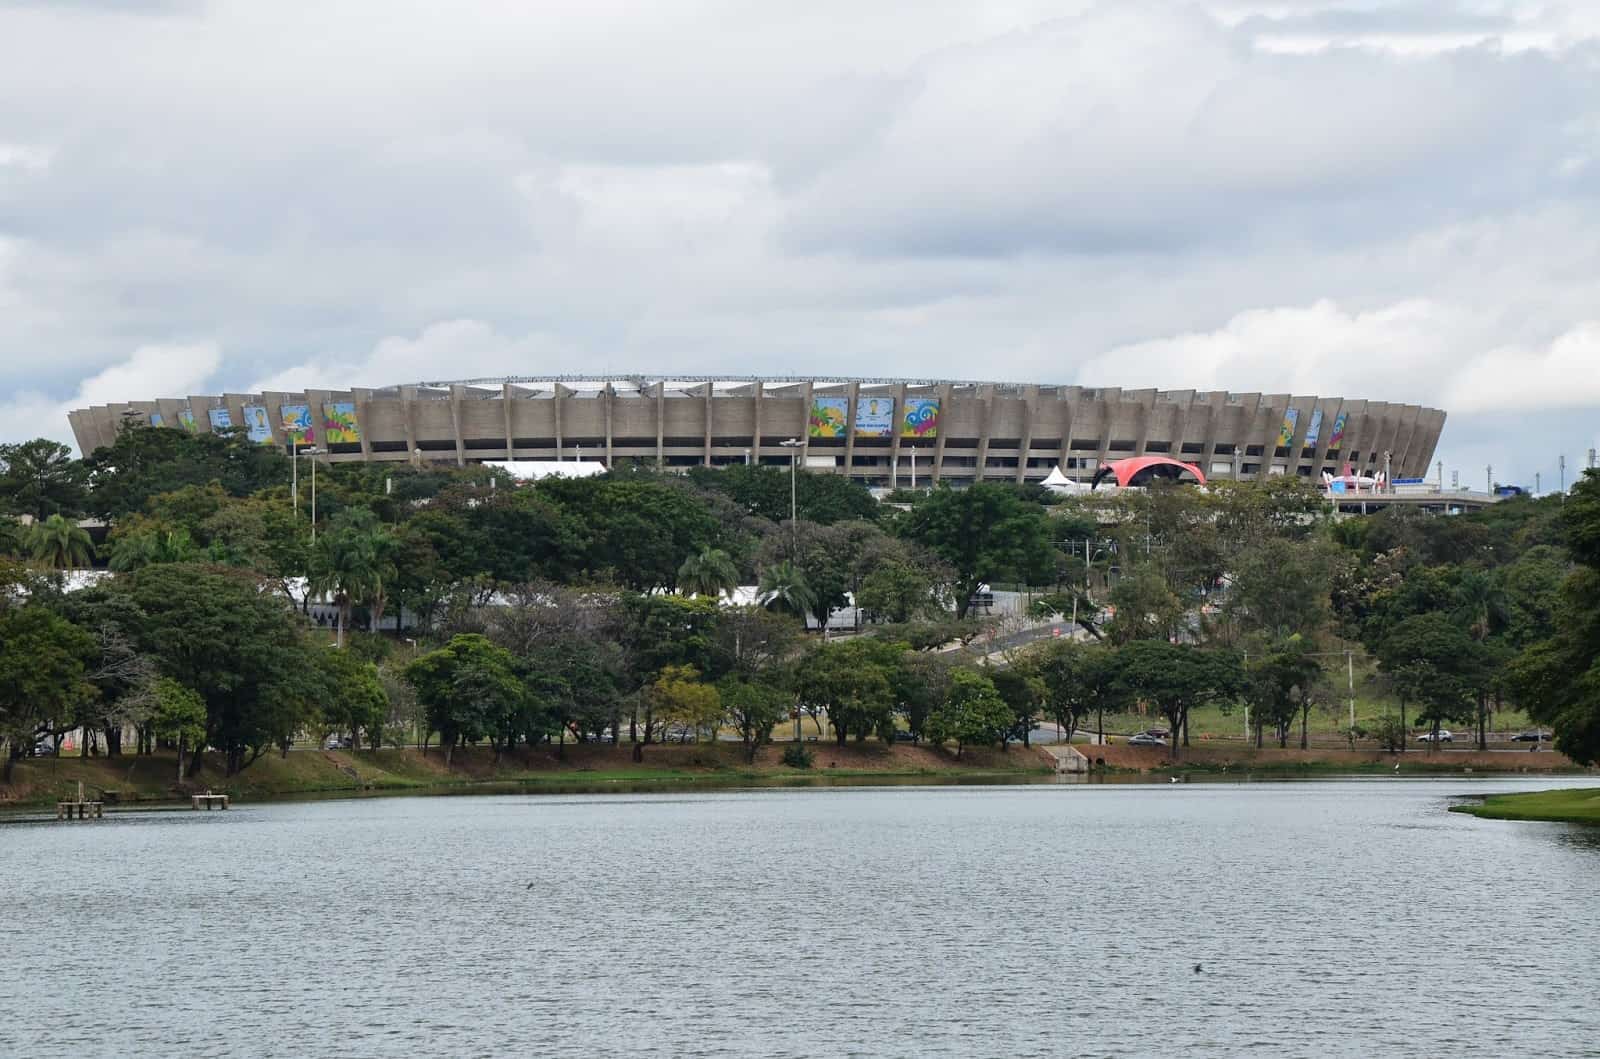 Estádio Mineirão in Belo Horizonte, Brazil